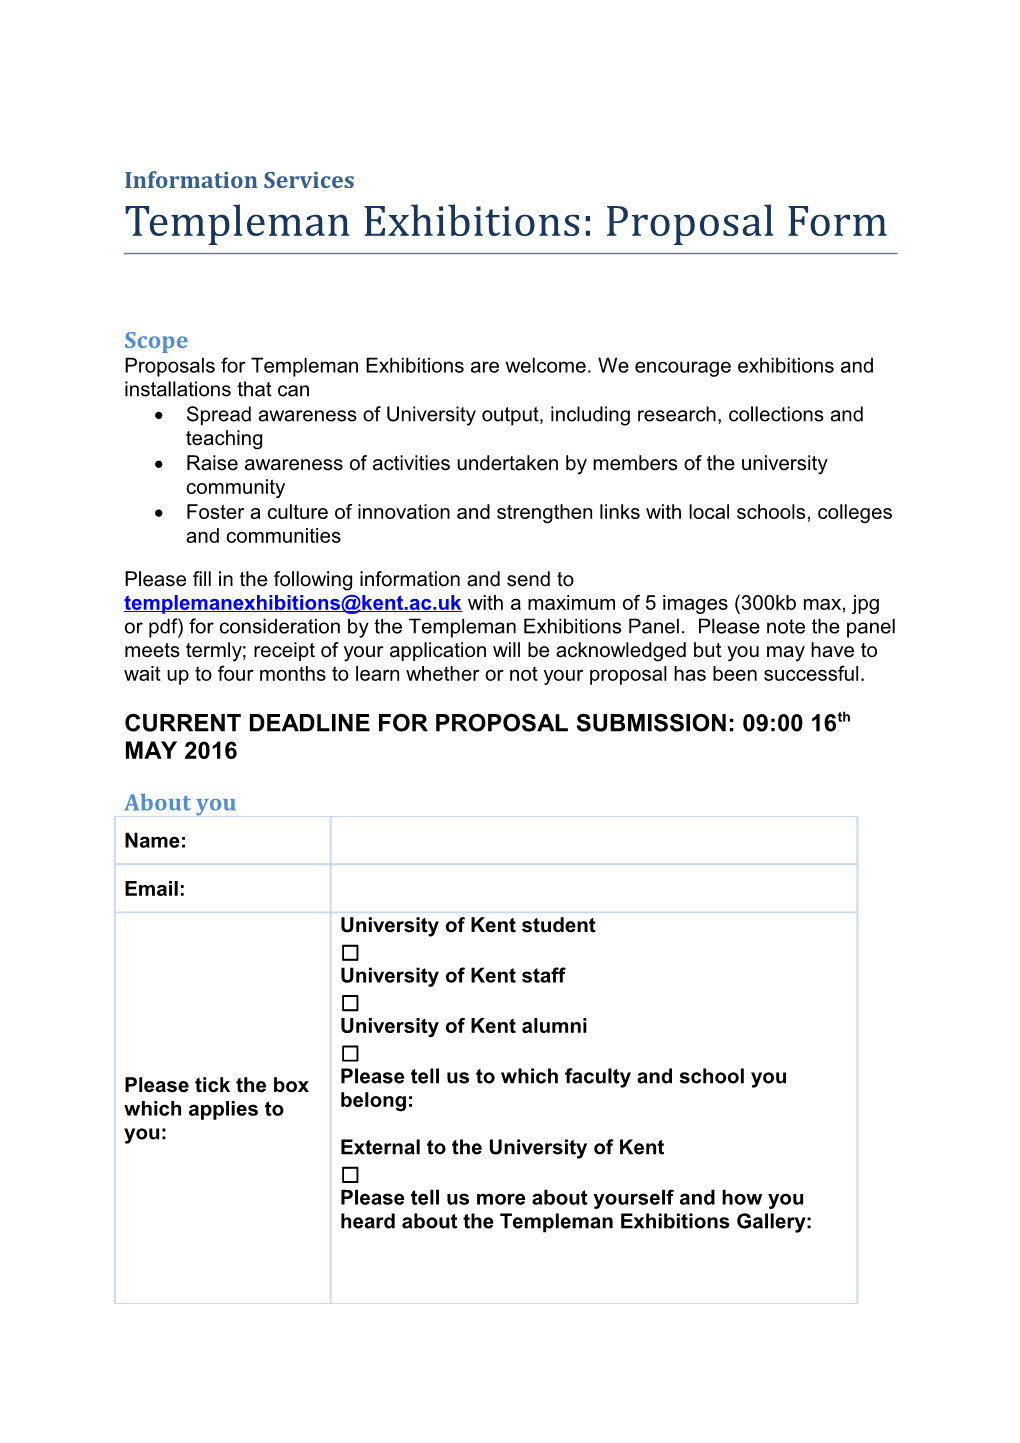 Exhibitors Proposal Form Version 0.4 (3)